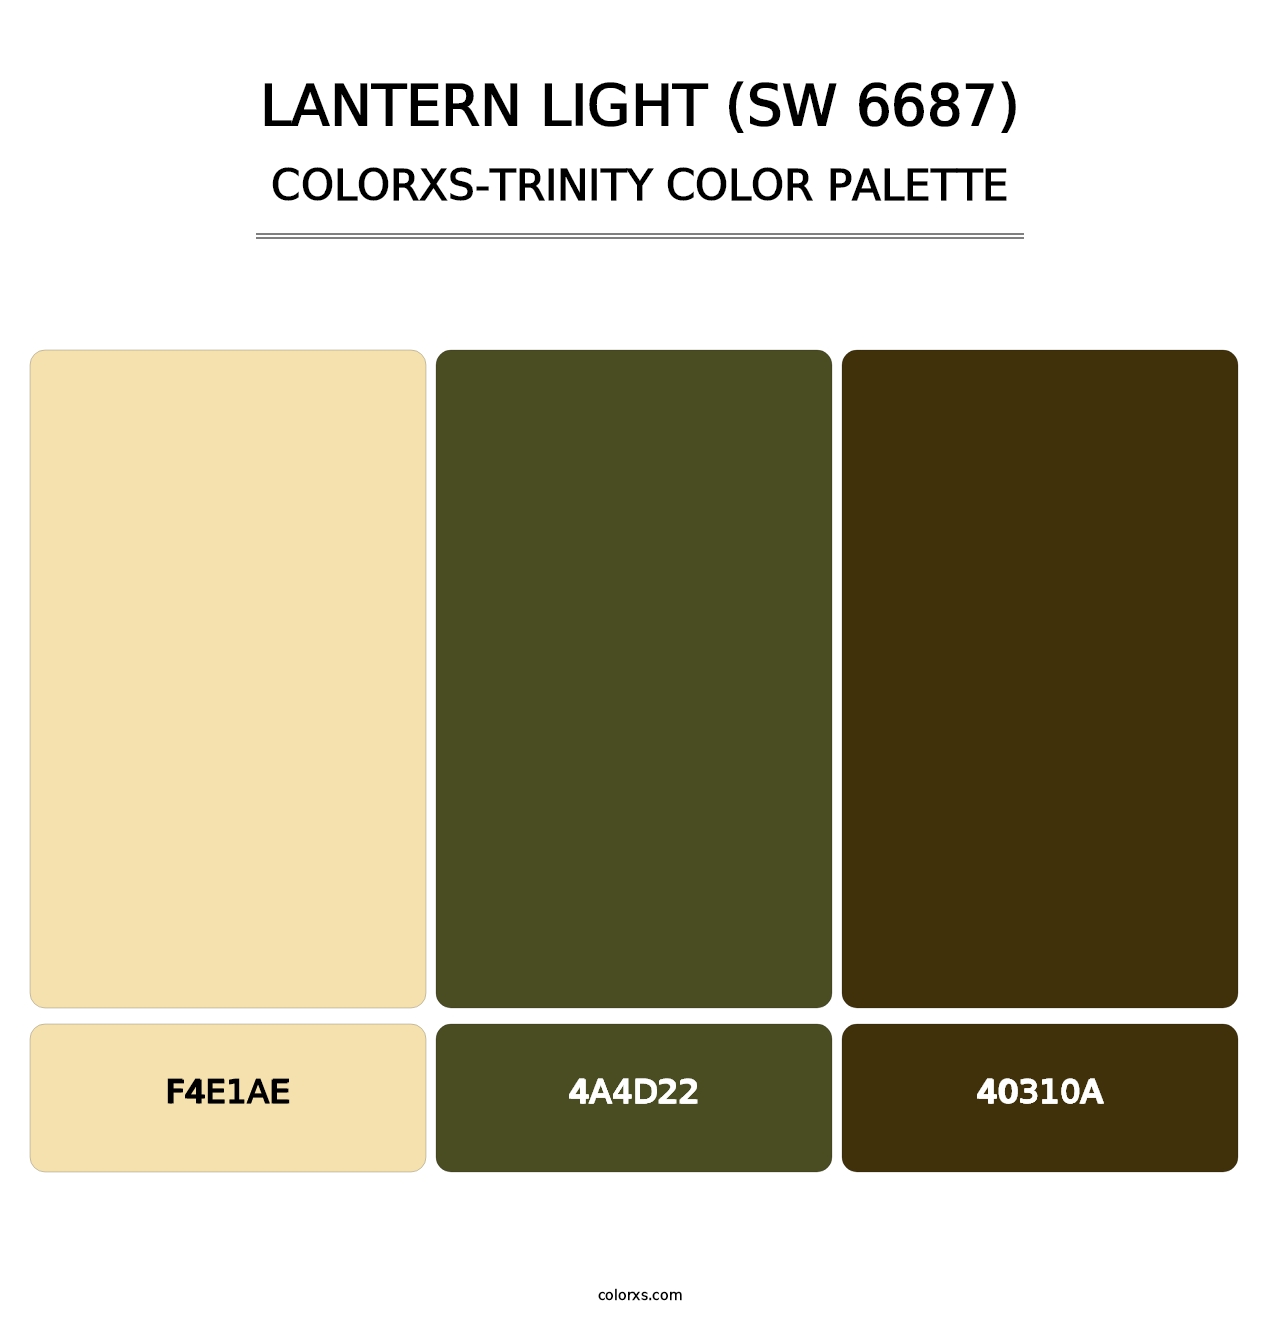 Lantern Light (SW 6687) - Colorxs Trinity Palette